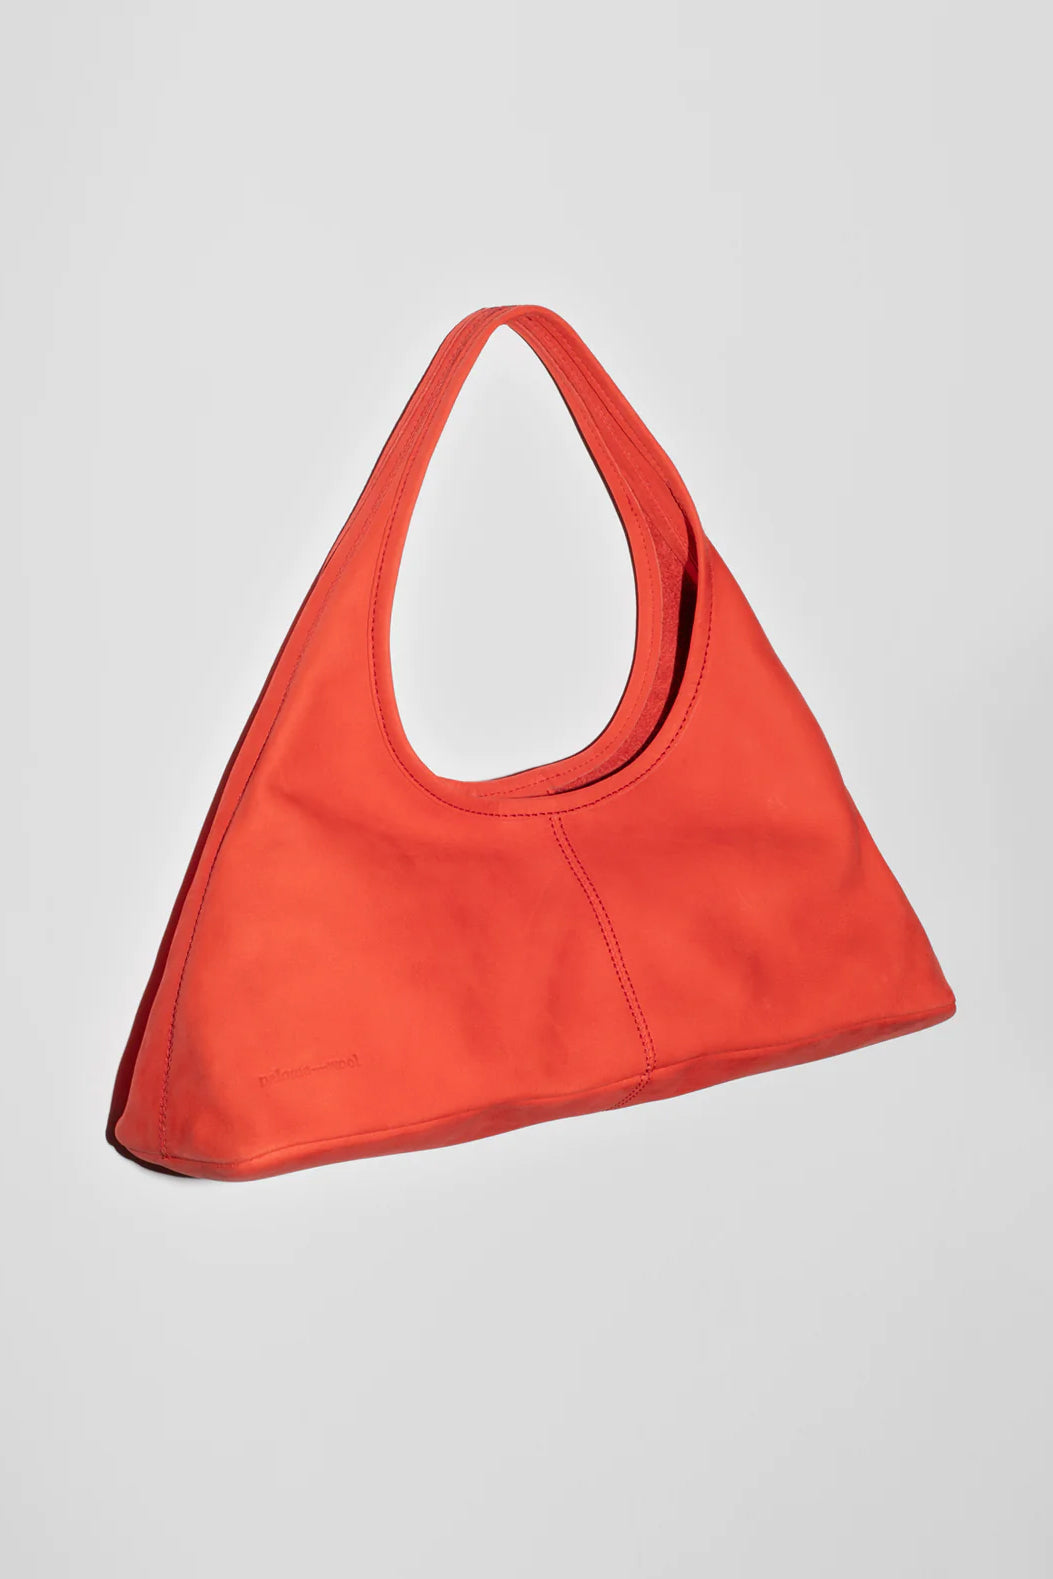 Paloma Wool Querida Bag // Red